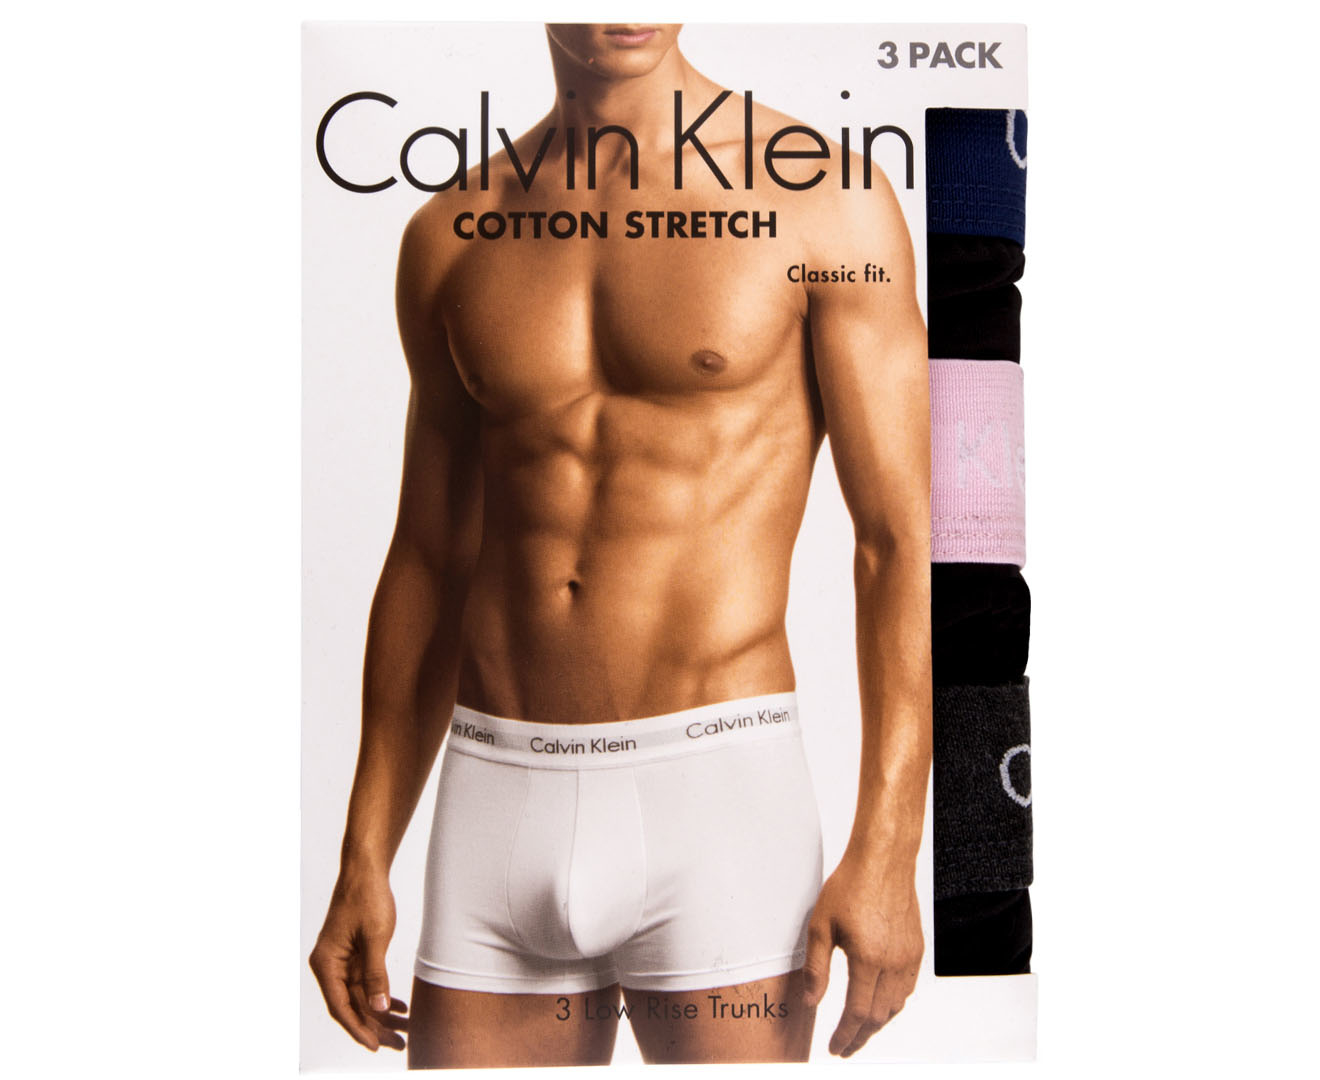 Tommy Hilfiger Men's Cotton Stretch Low Rise Trunks 3-Pack - Black